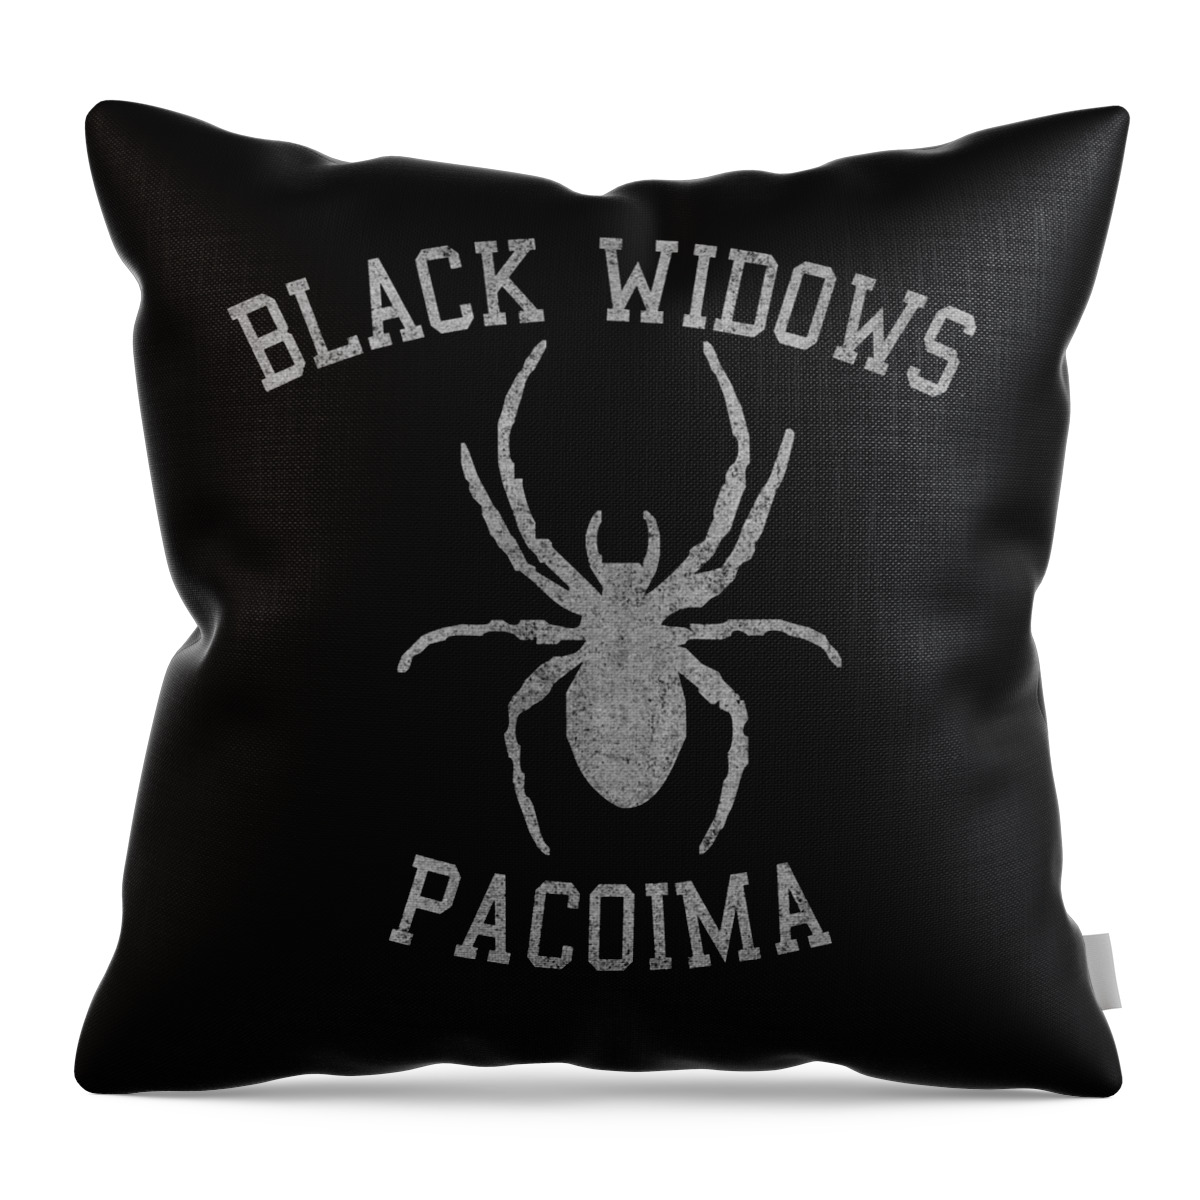 Funny Throw Pillow featuring the digital art Widows Pacoima by Flippin Sweet Gear